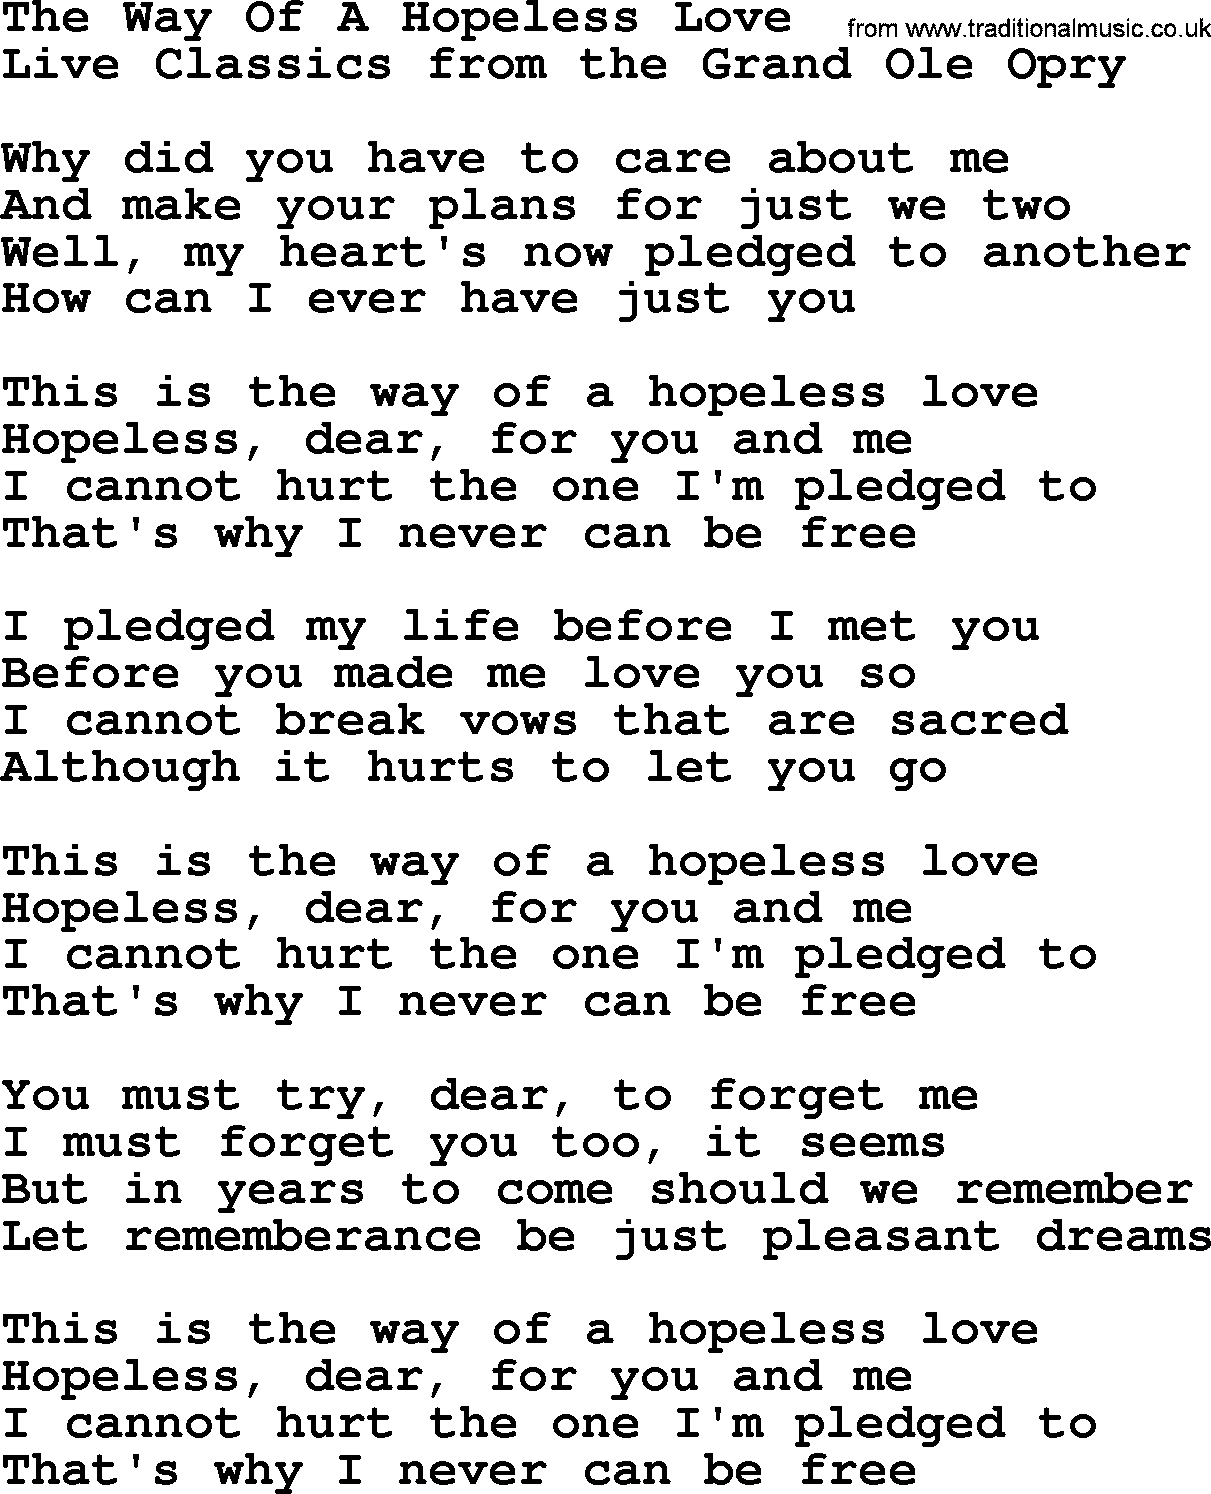 Marty Robbins song: The Way Of A Hopeless Love, lyrics